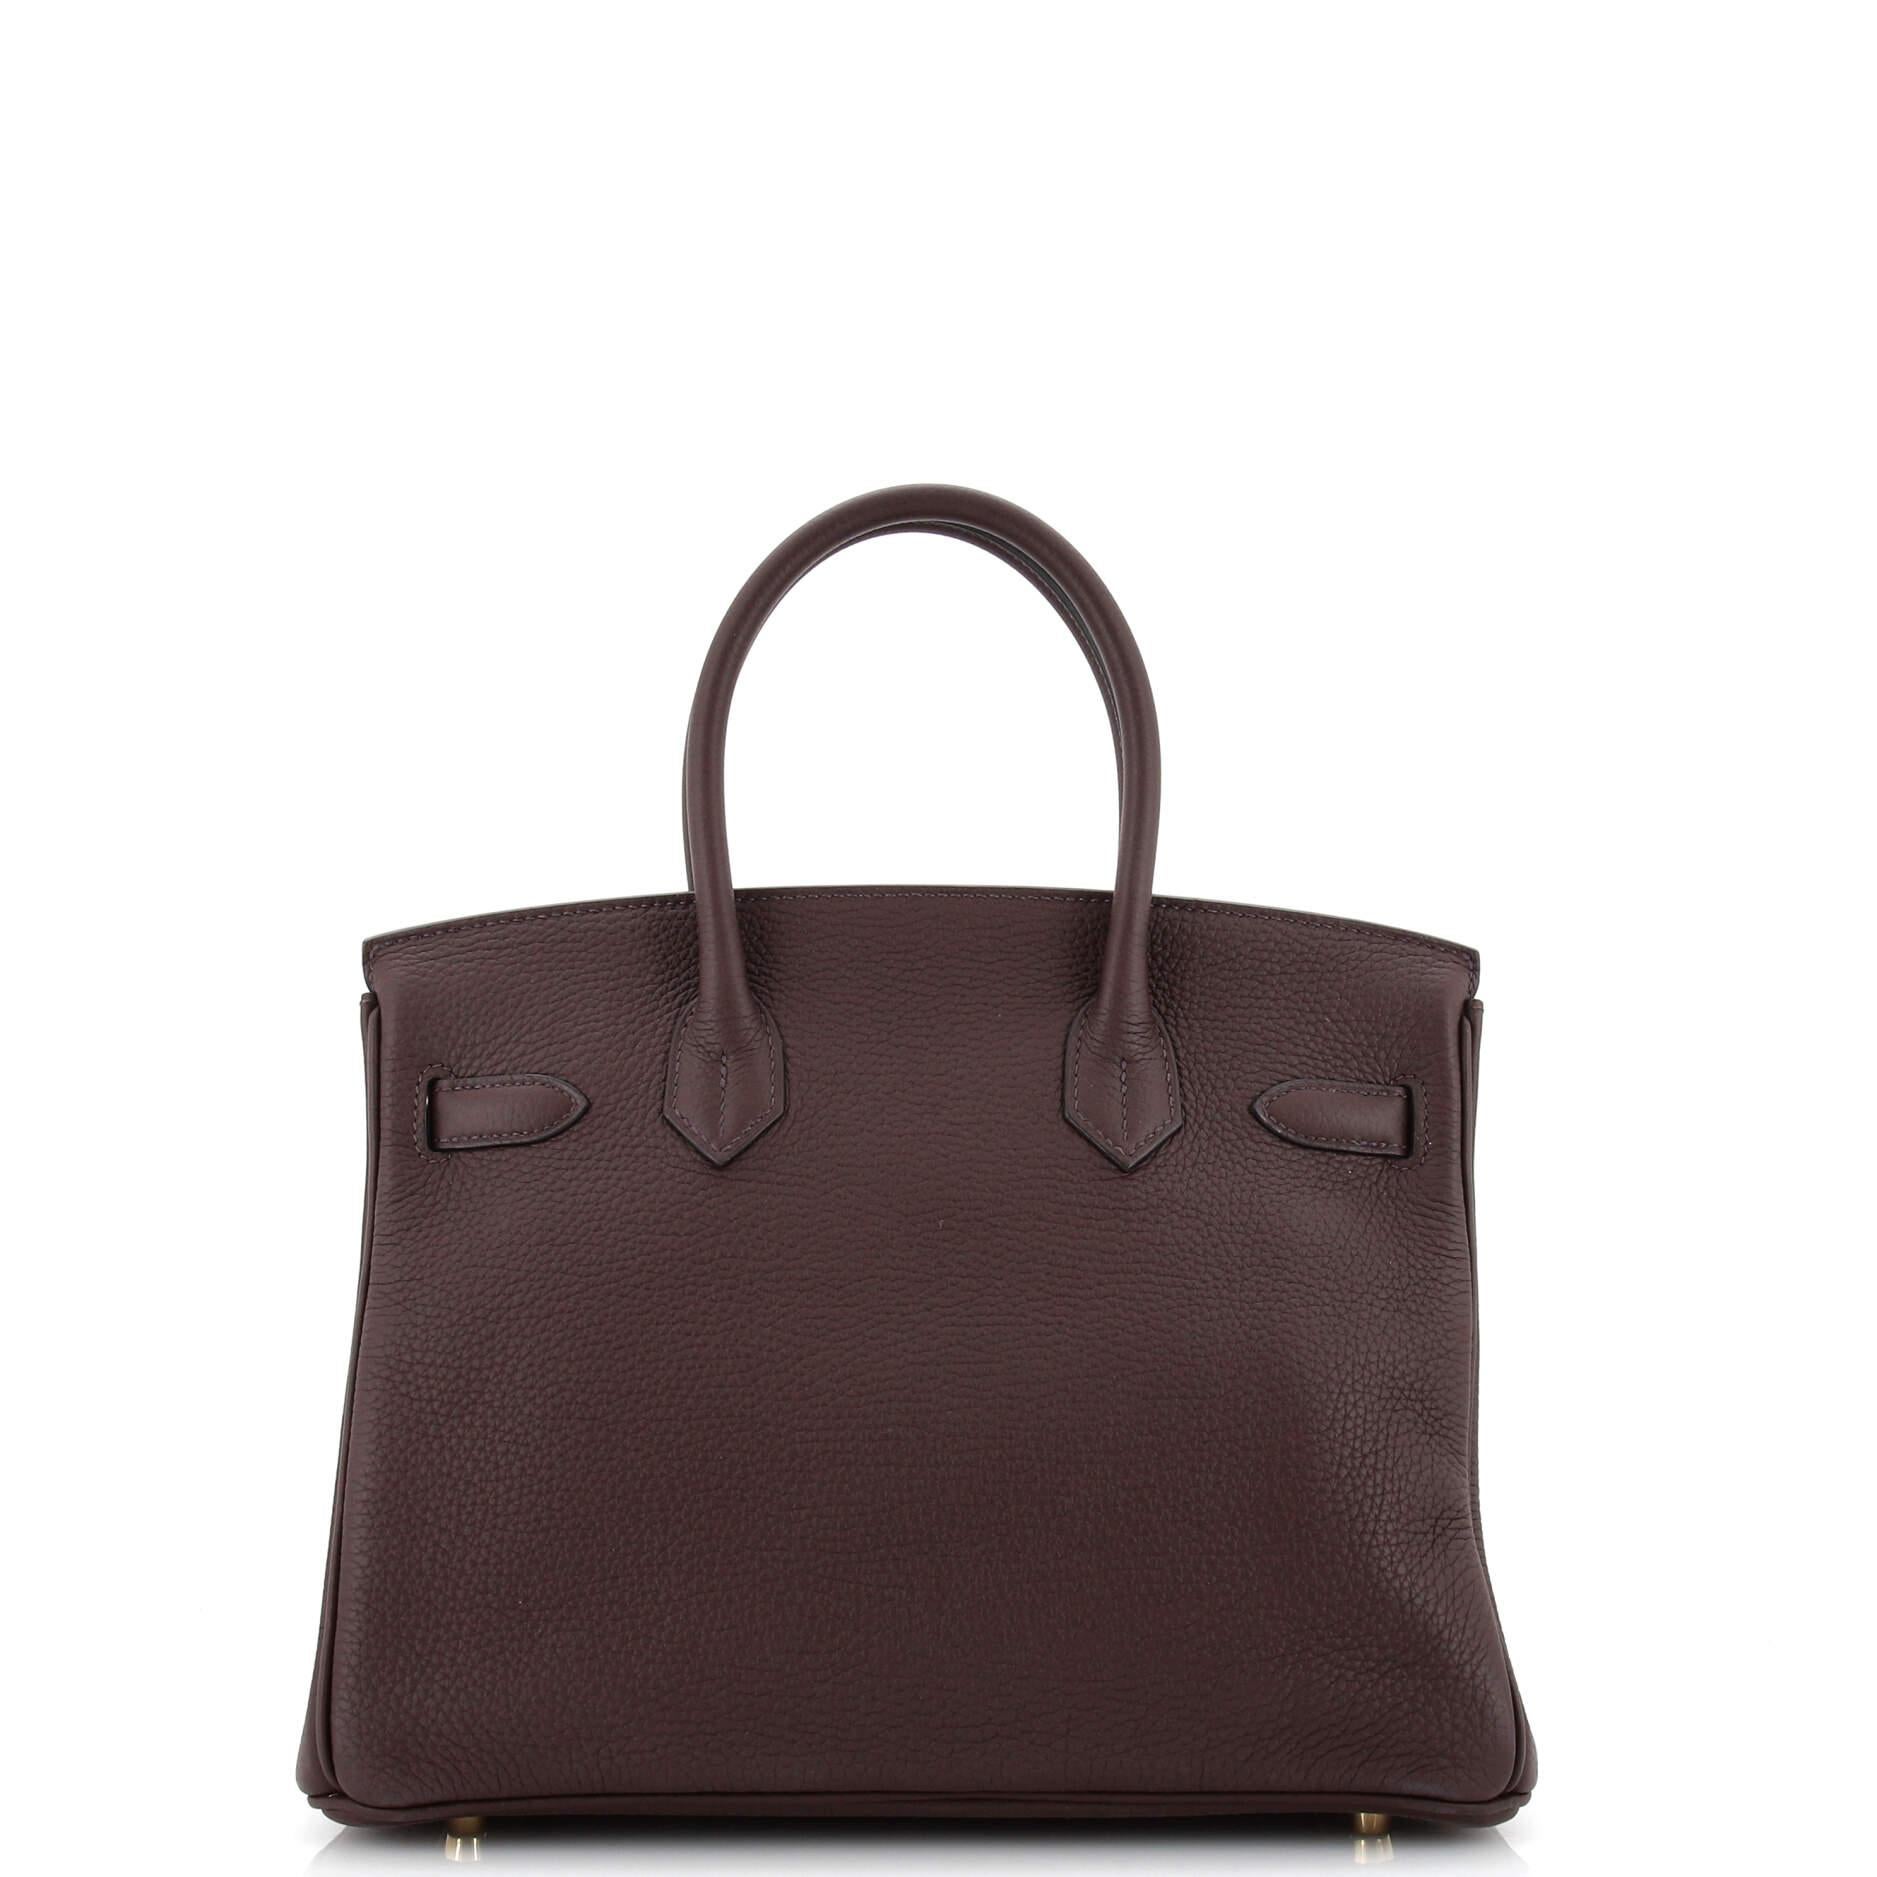 Women's or Men's Hermes Birkin Handbag Rouge Sellier Togo with Gold Hardware 30